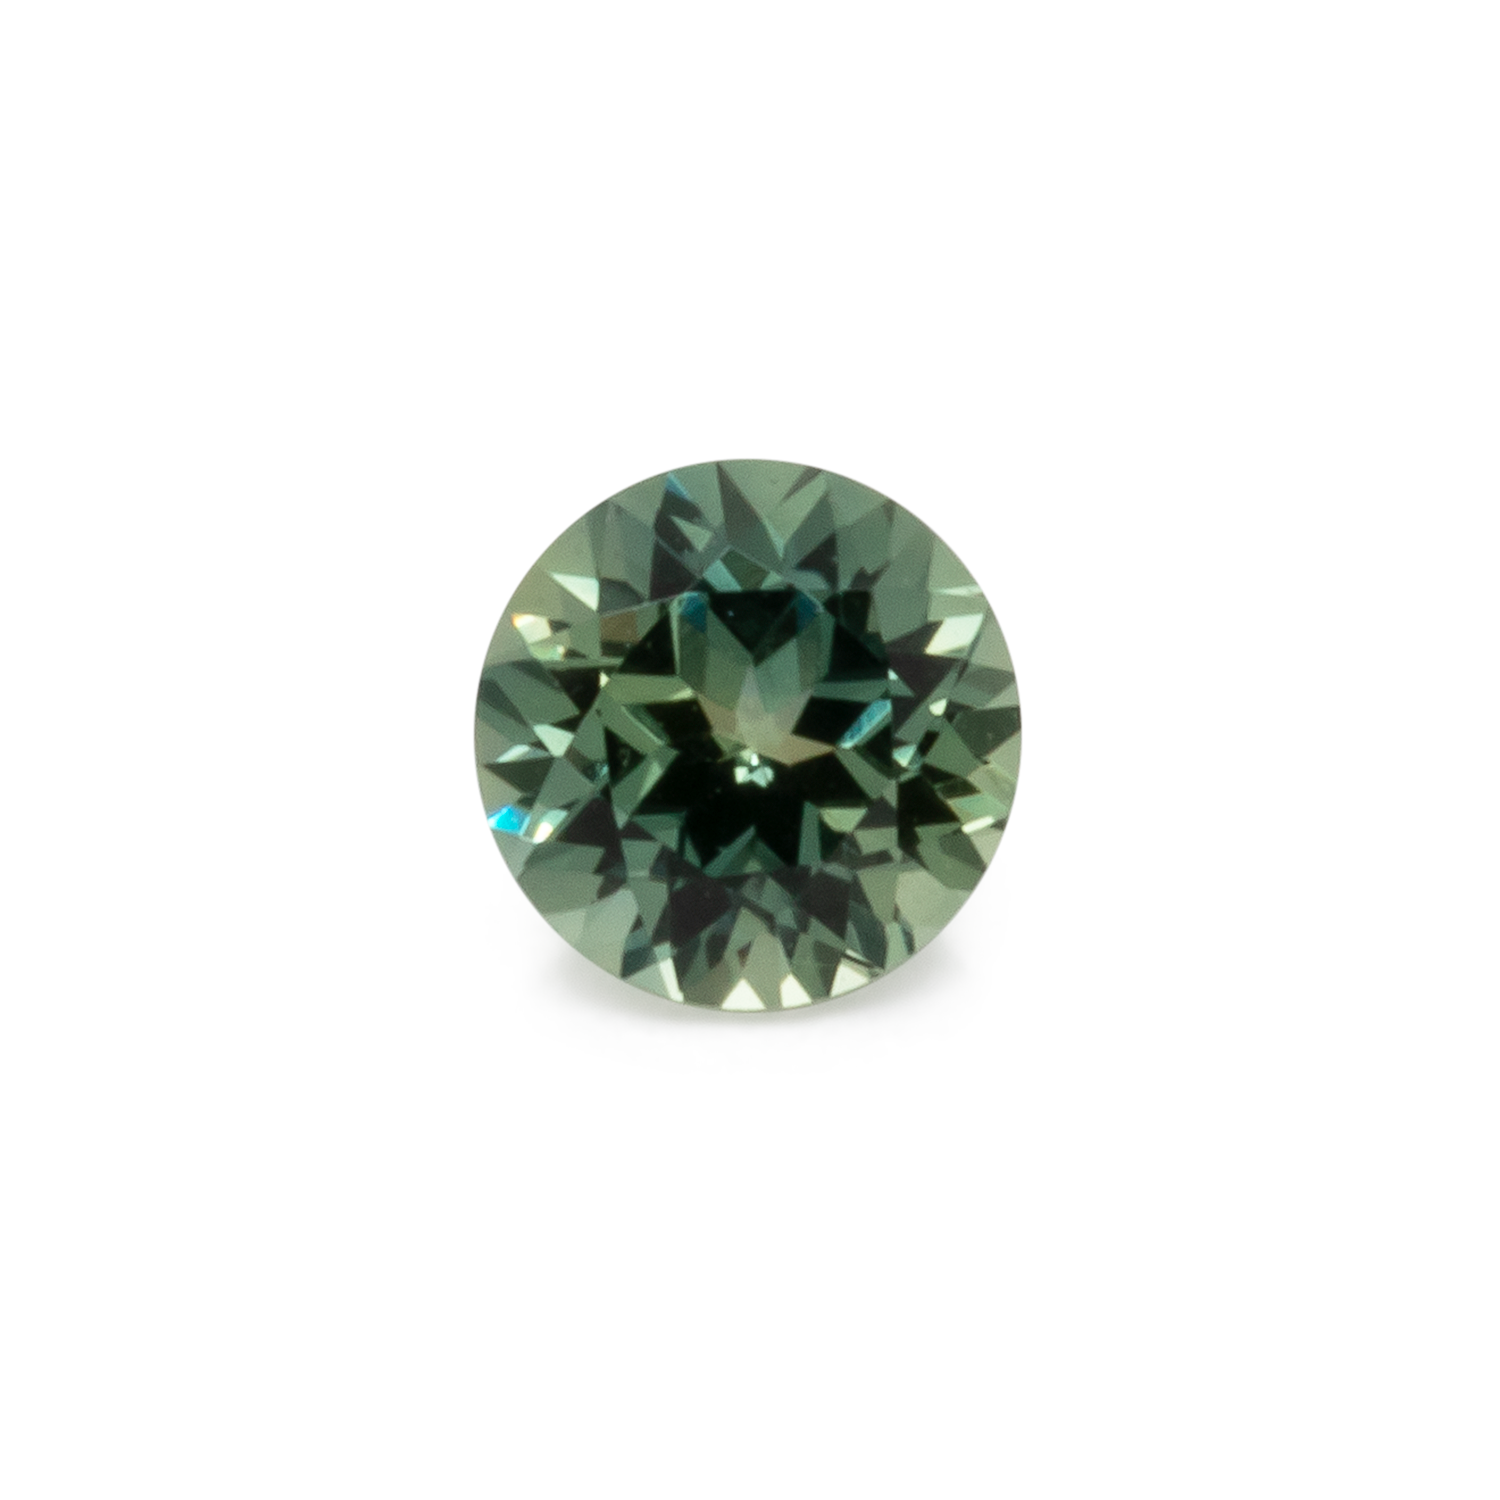 Sapphire - blue/green, round, 4.1x4.1 mm, 0.35 cts, No. XSR11214